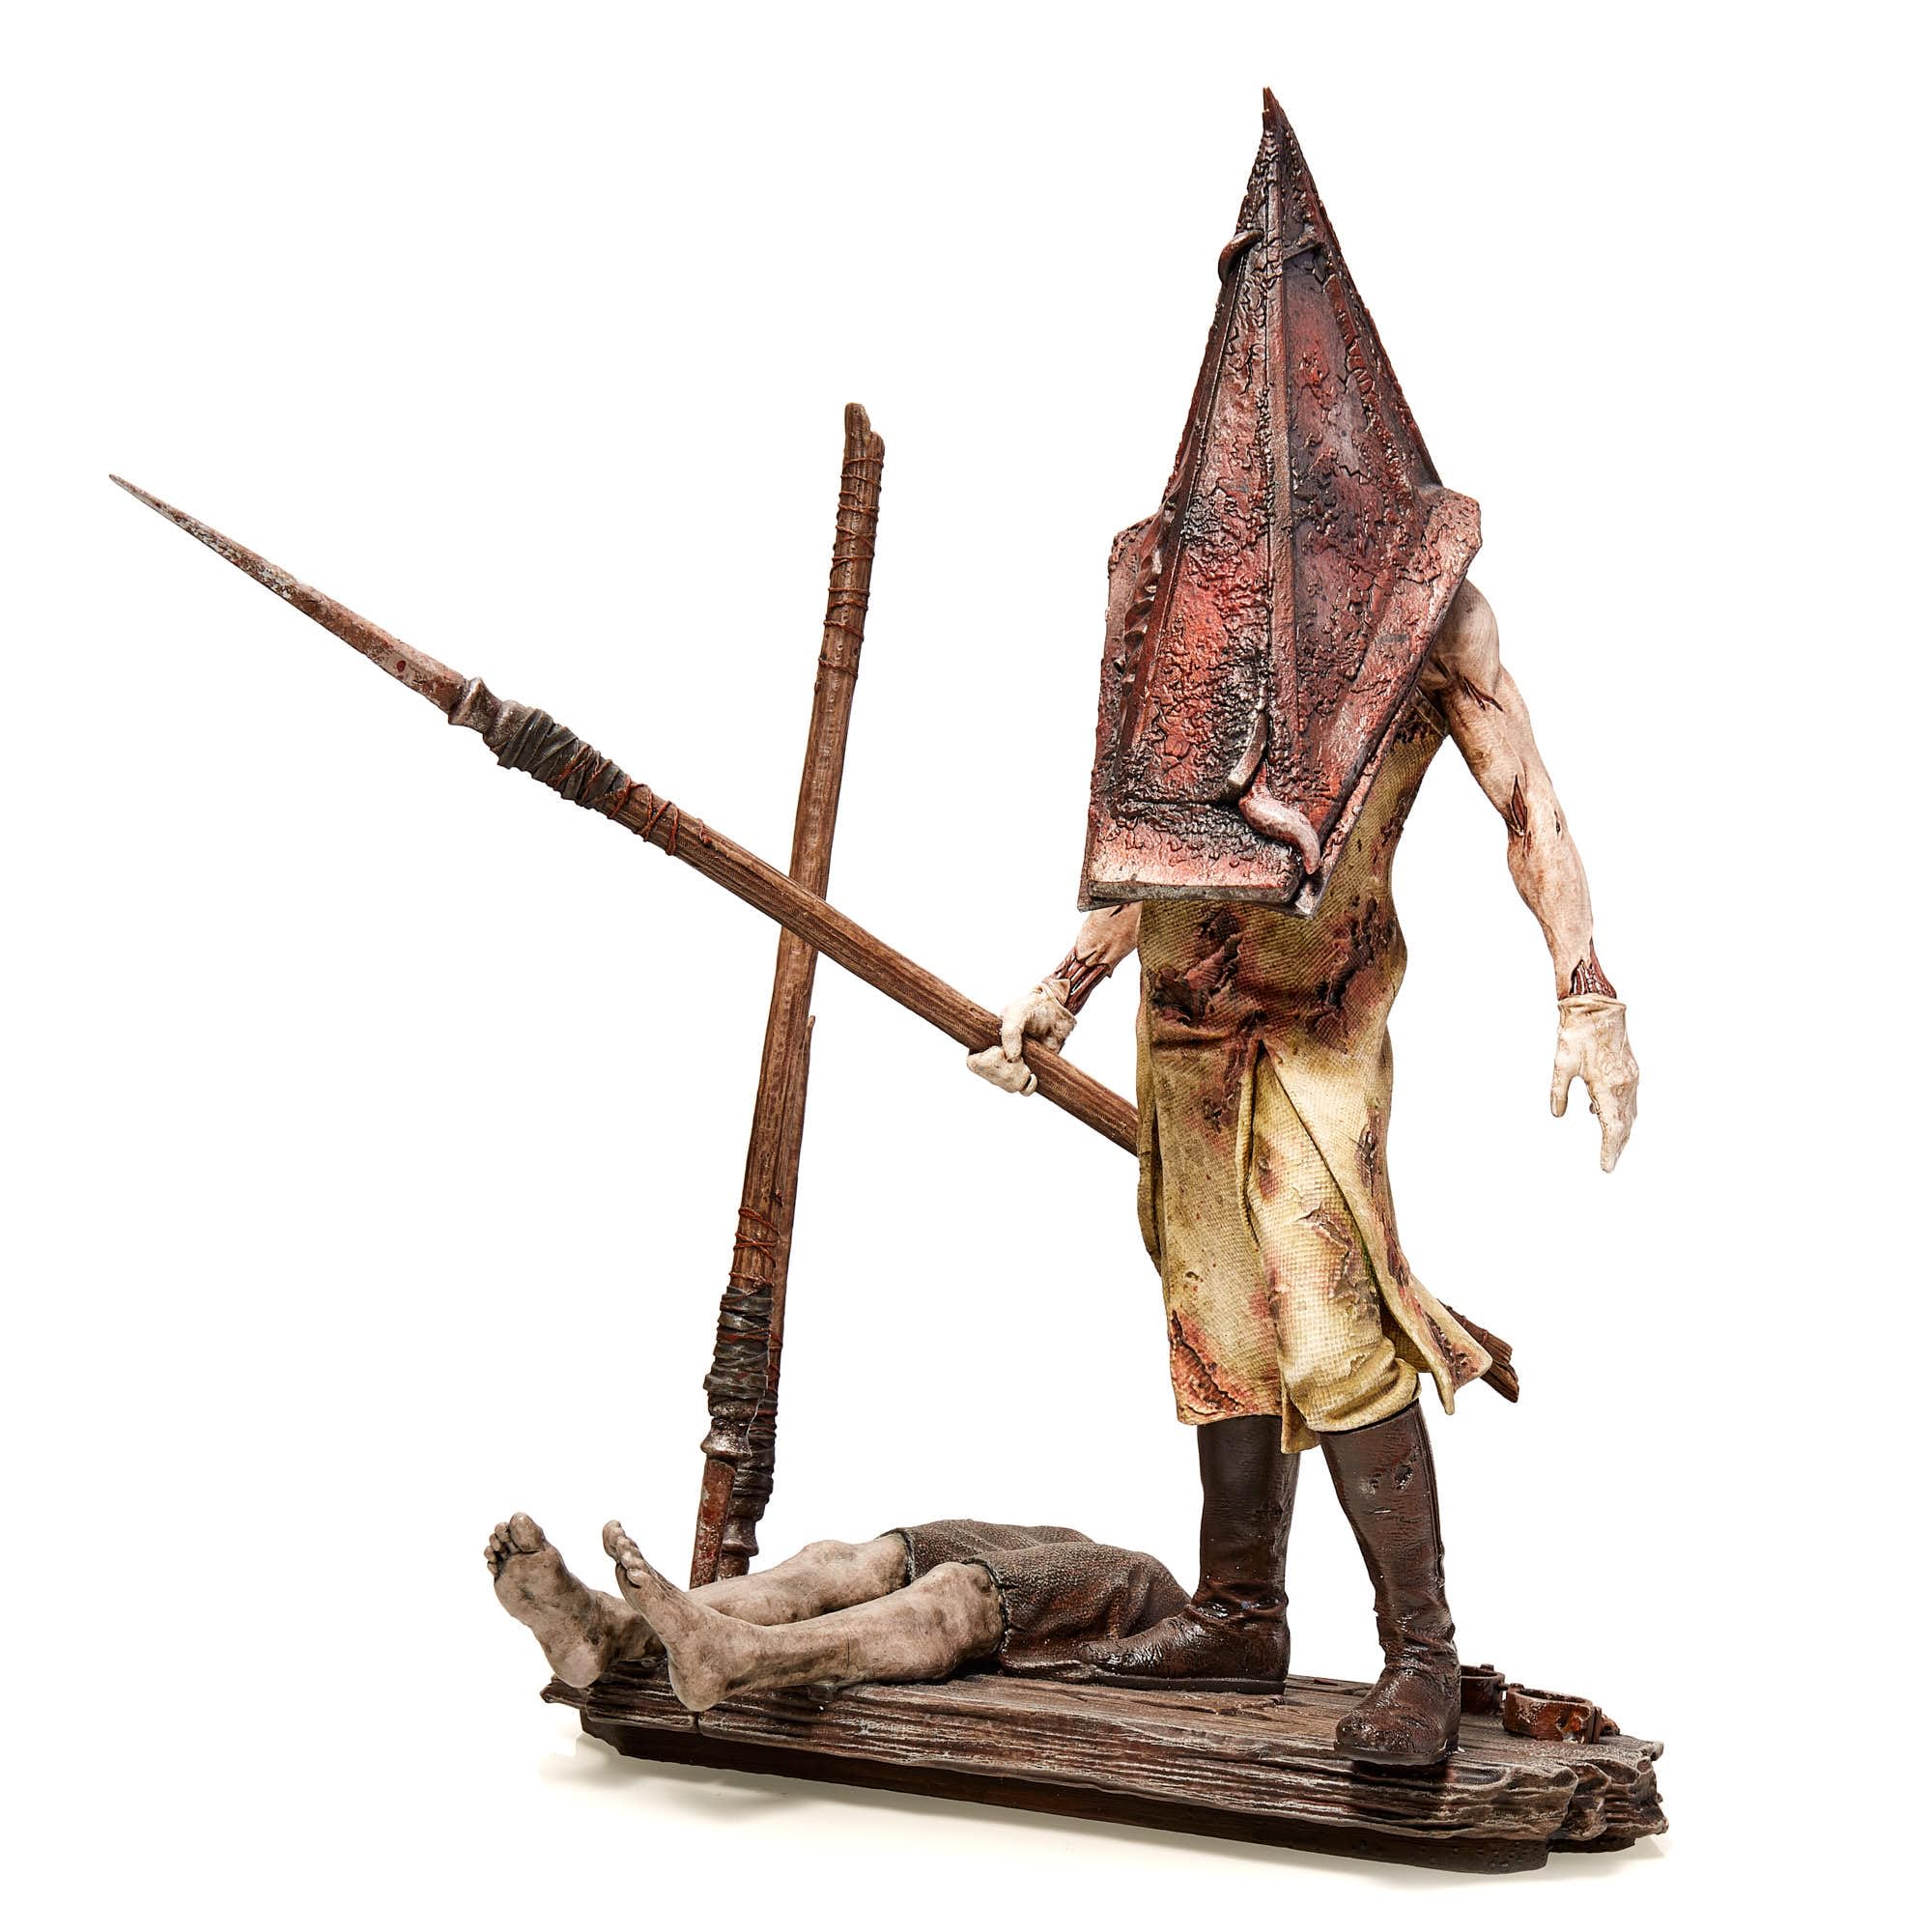 Numskull Silent Hill 2 Red Pyramid Thing Figur 11,6″ (29,5cm) Sammelbare Replik Statue - Offizielle Silent Hill Merchandise - Limitierte Auflage